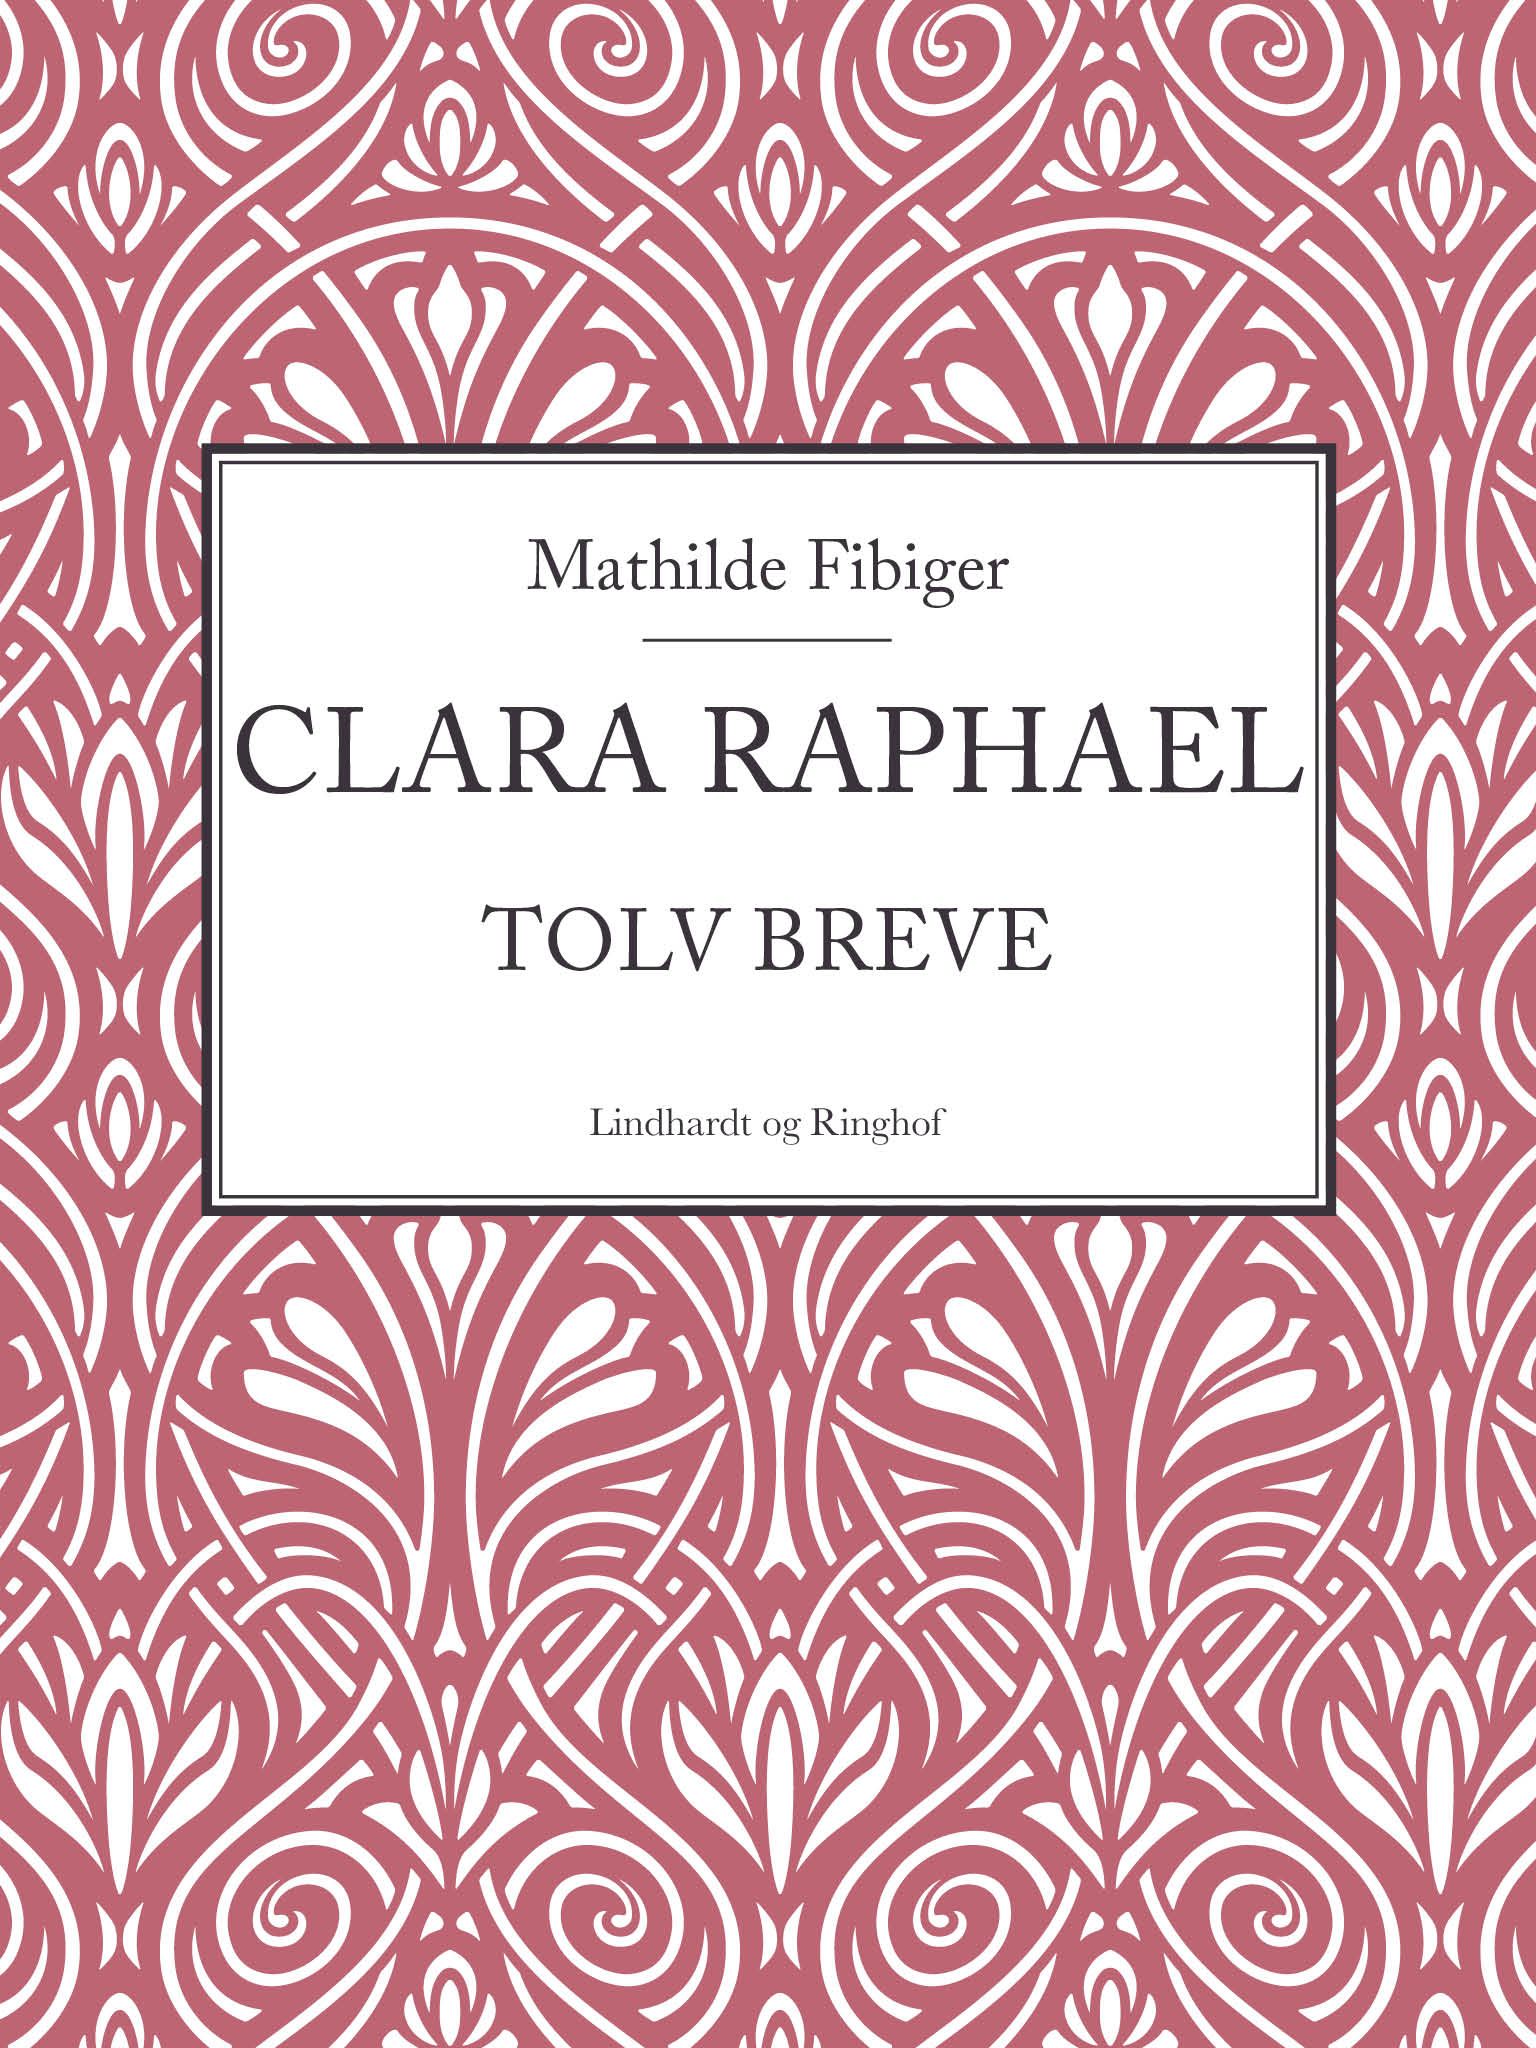 Clara Raphael, eBook by Mathilde Fibiger